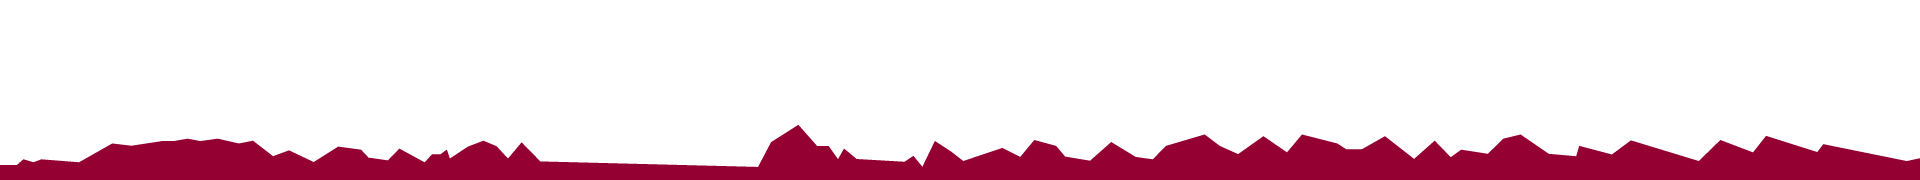 elevation-graph